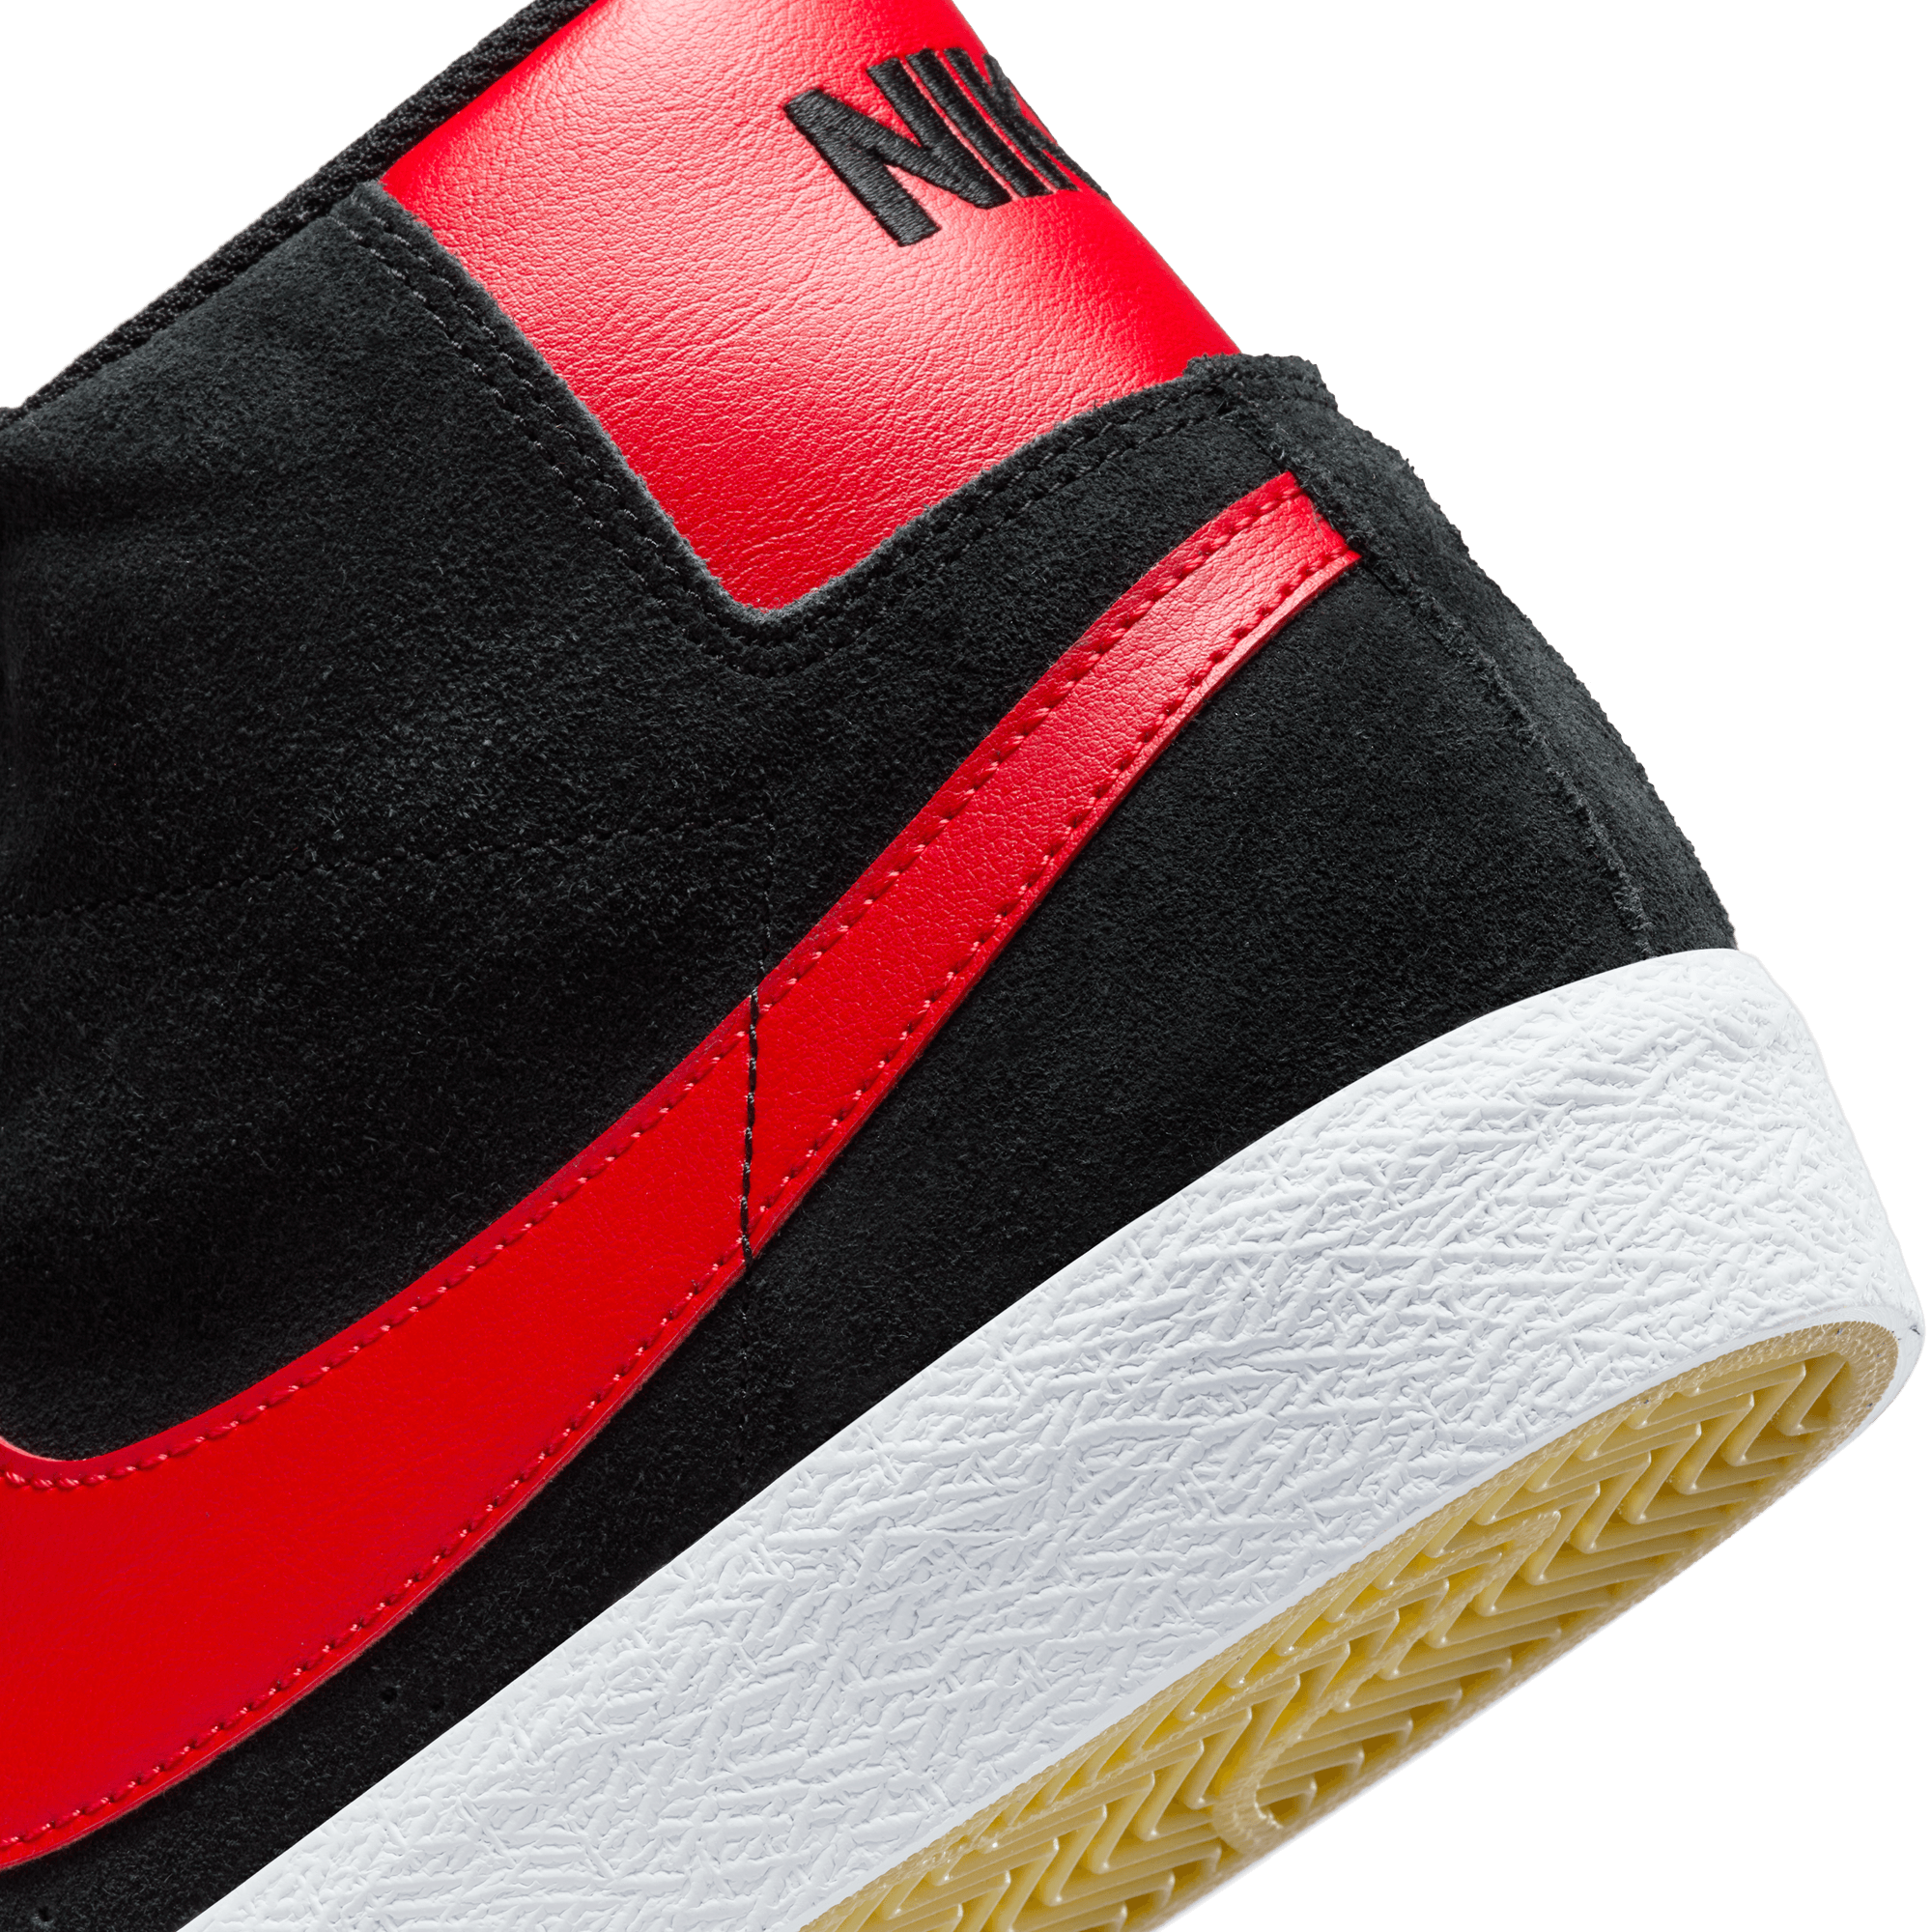 Black/Red Blazer Mid Nike SB Skate Shoe Detail